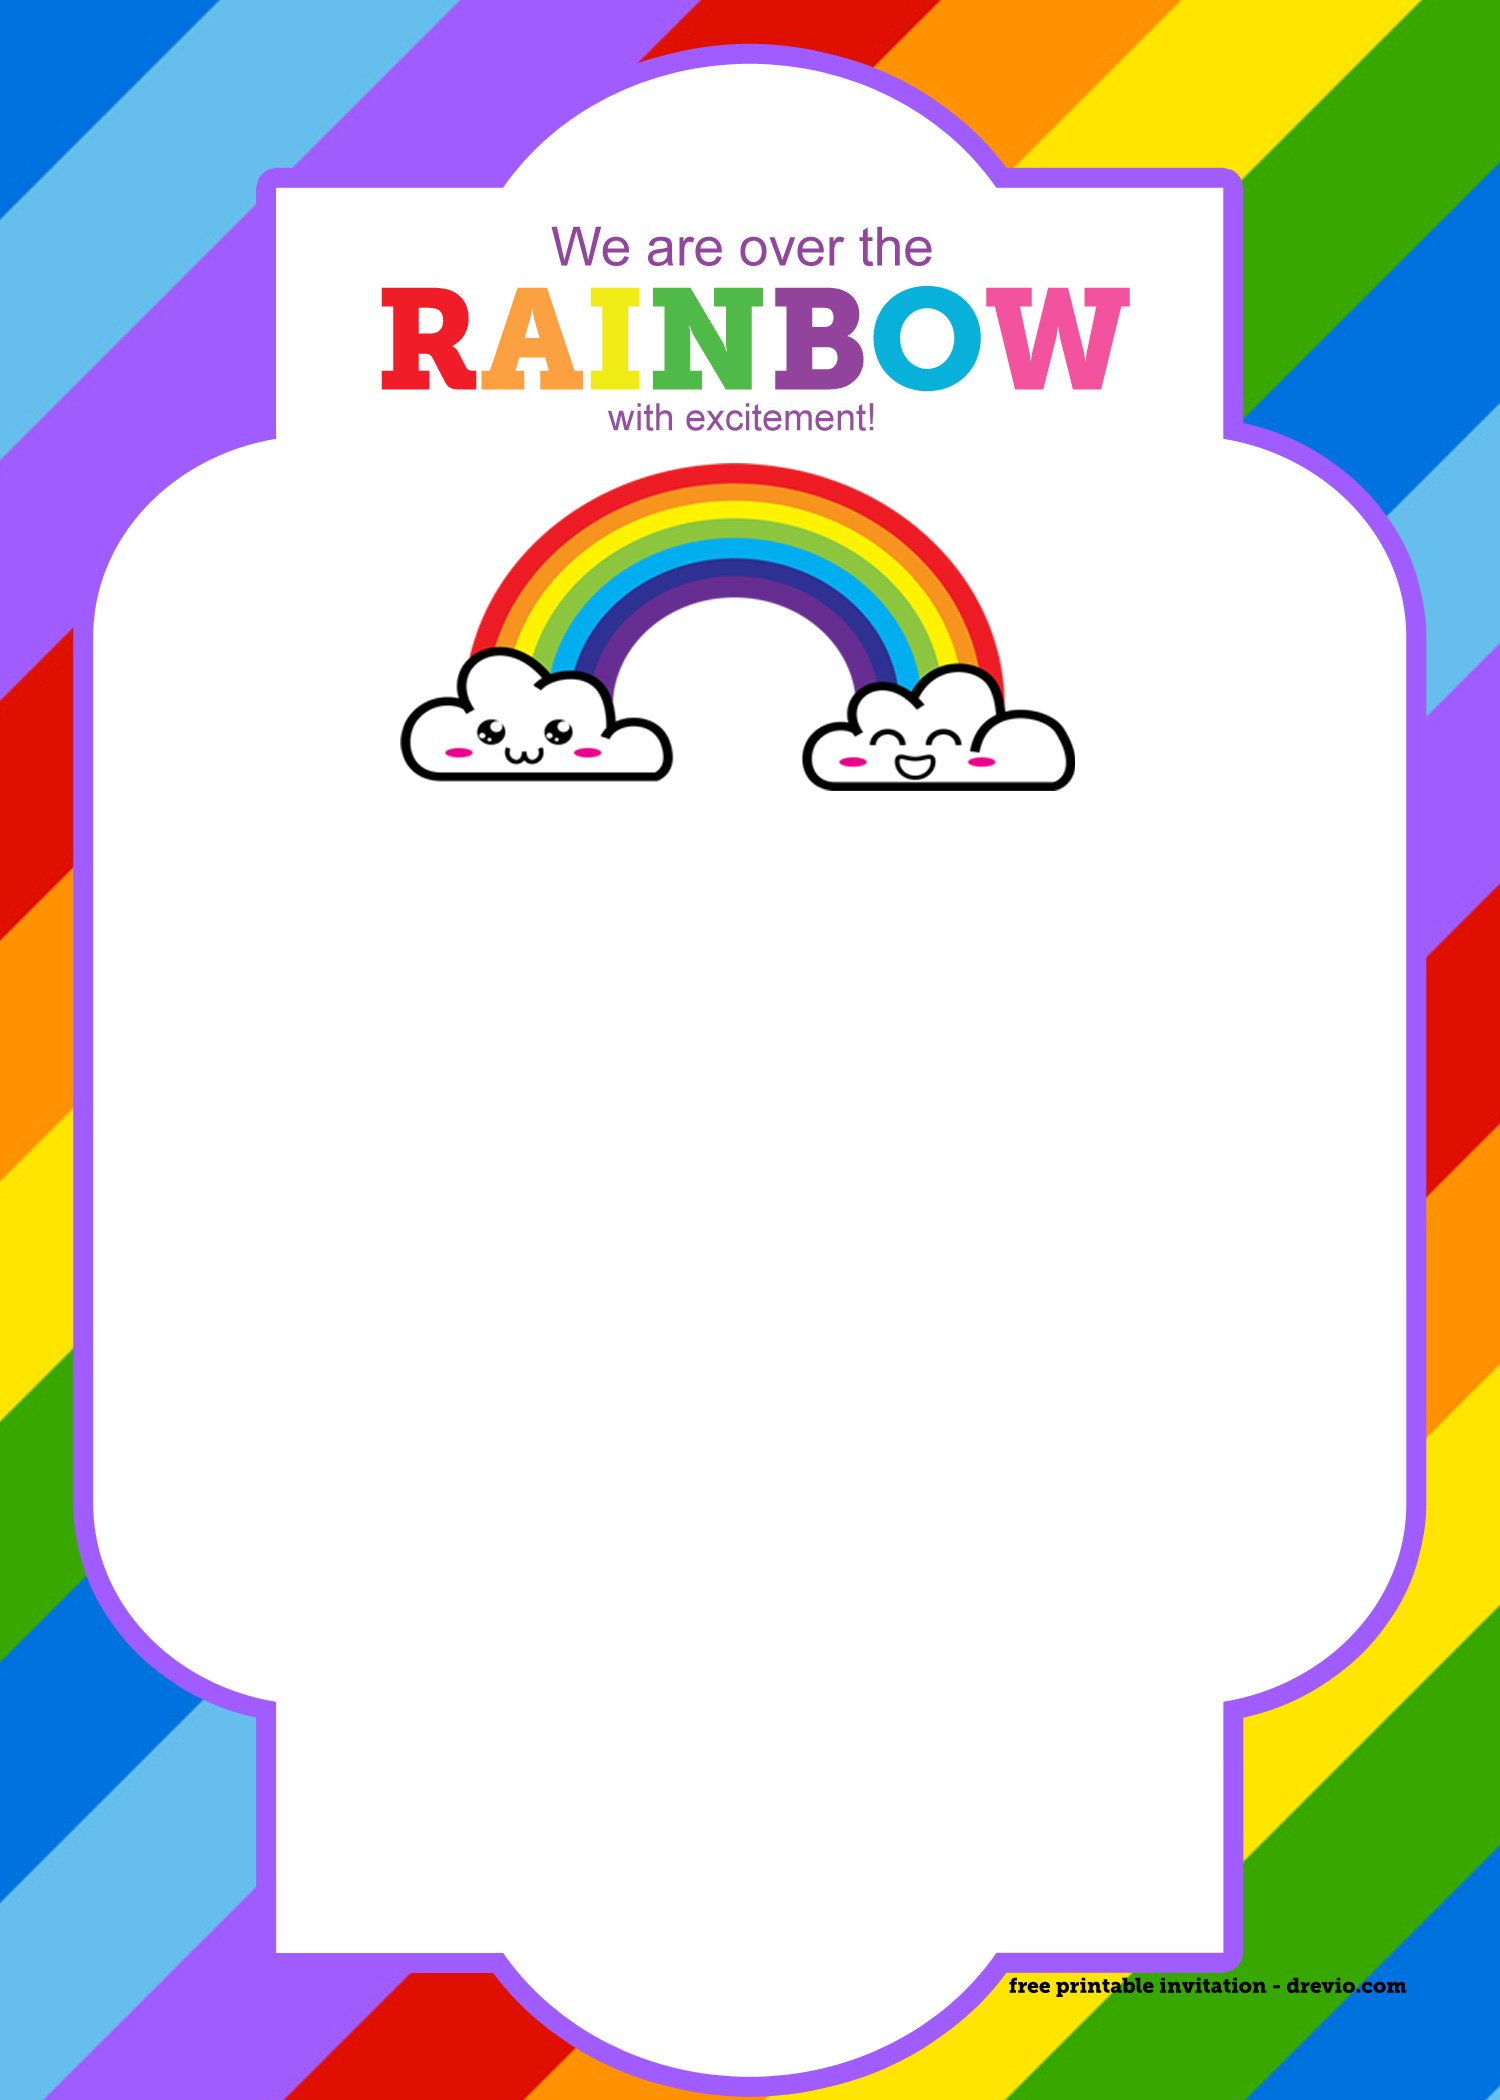 FREE Printable Rainbow Invitation Template Thank You Card Download Hundreds FREE PRINTABLE